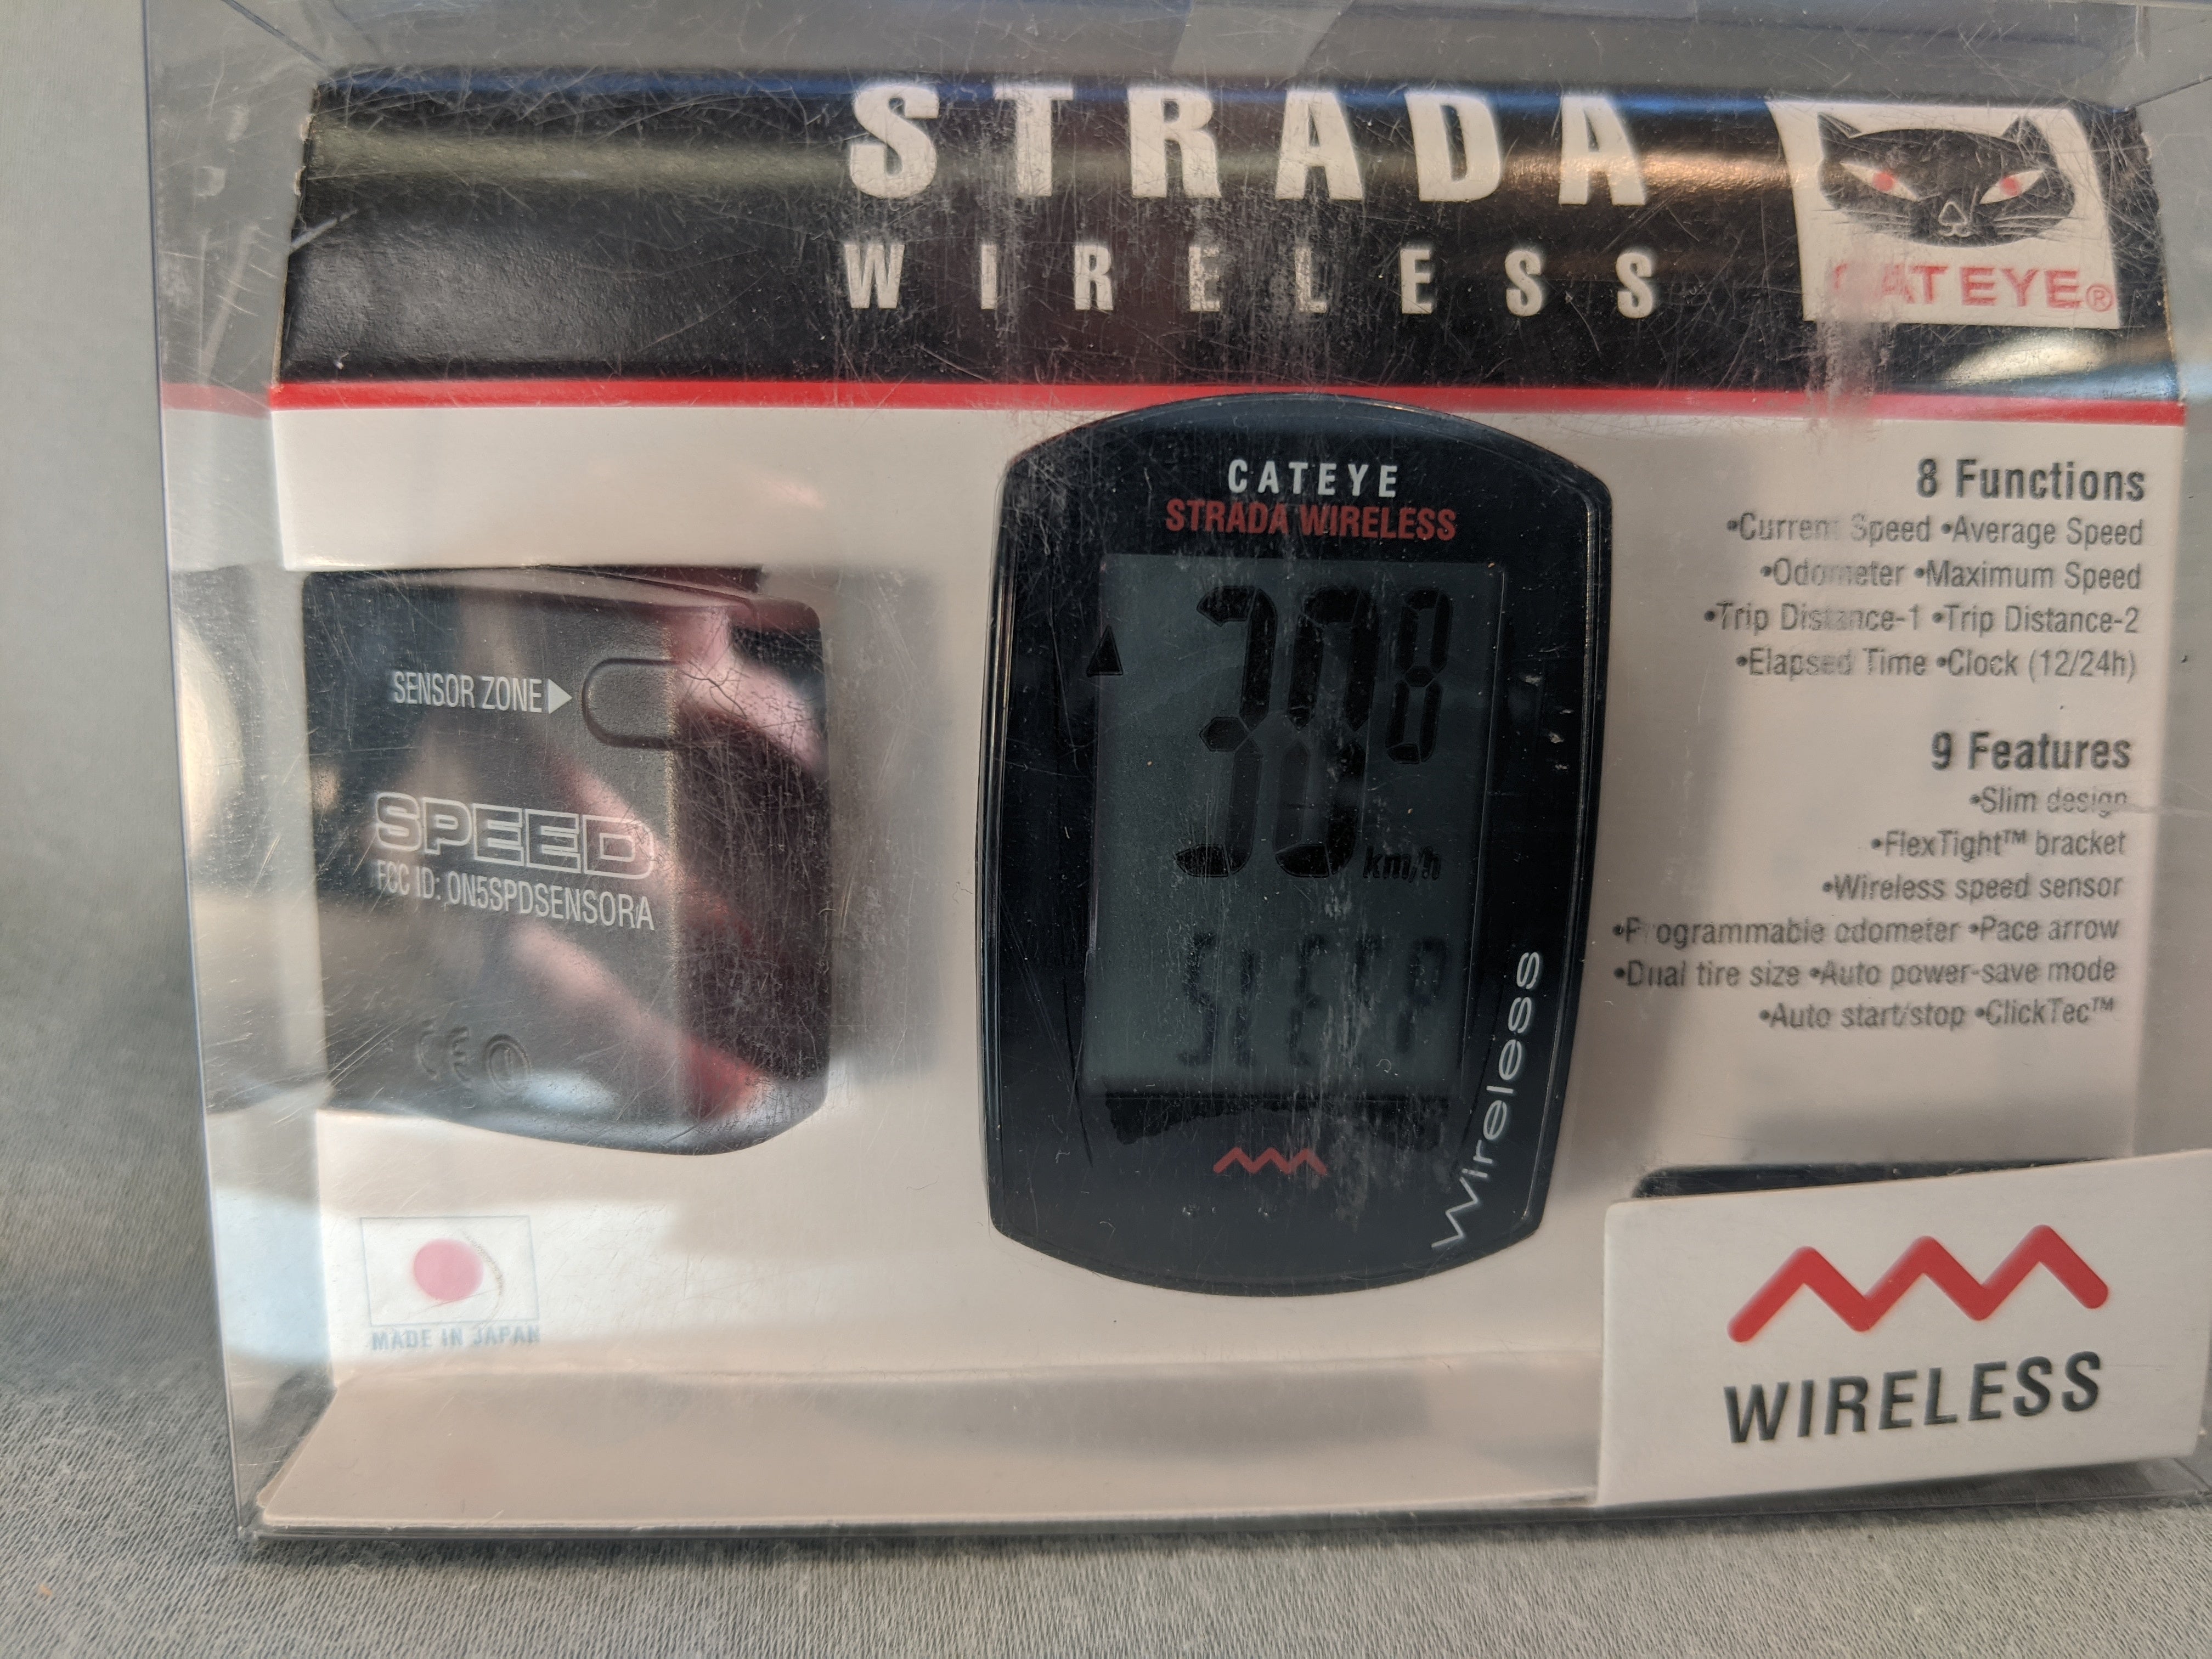 Strada Wireless from Cat Eye